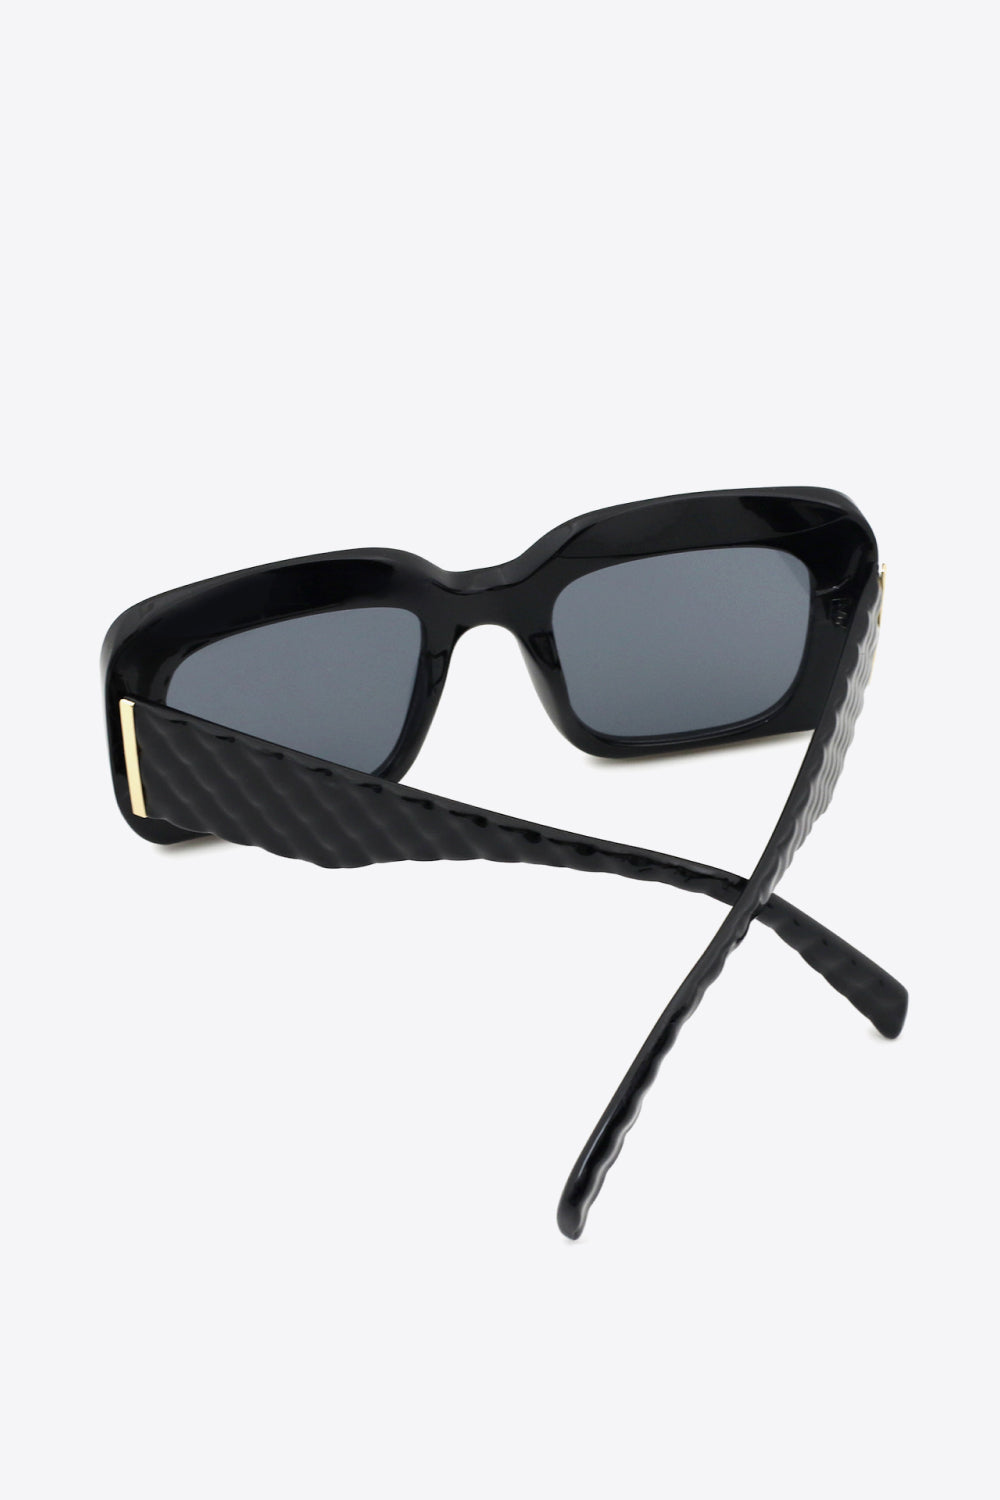 Uylee’s Boutique Square Polycarbonate UV400 Sunglasses